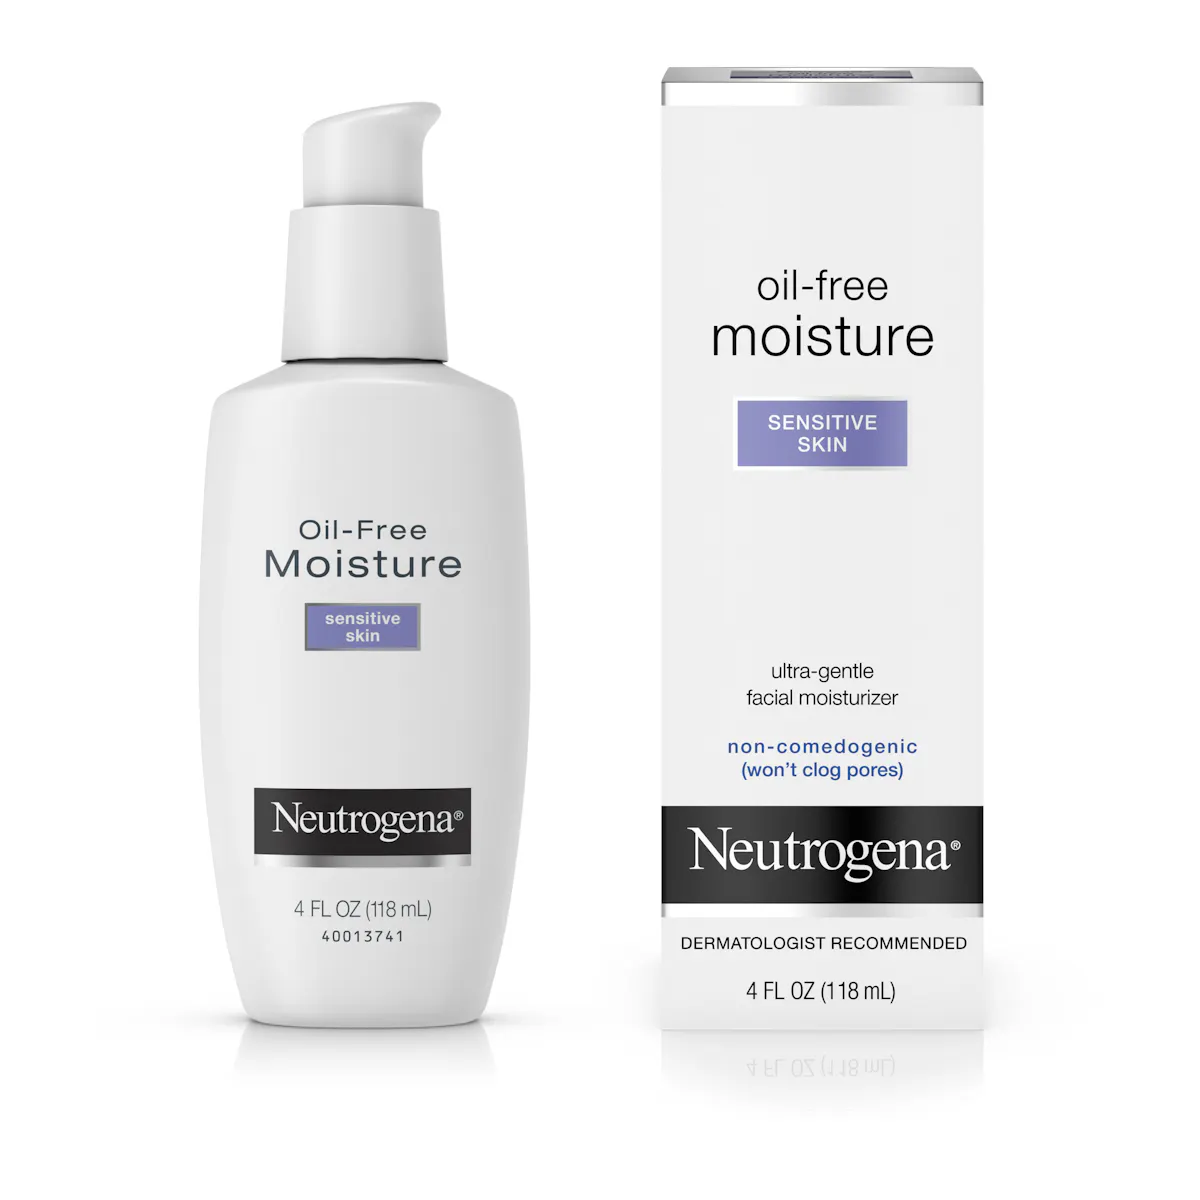 & Oil-Free Face Moisturizer For Sensitive Skin | NEUTROGENA®